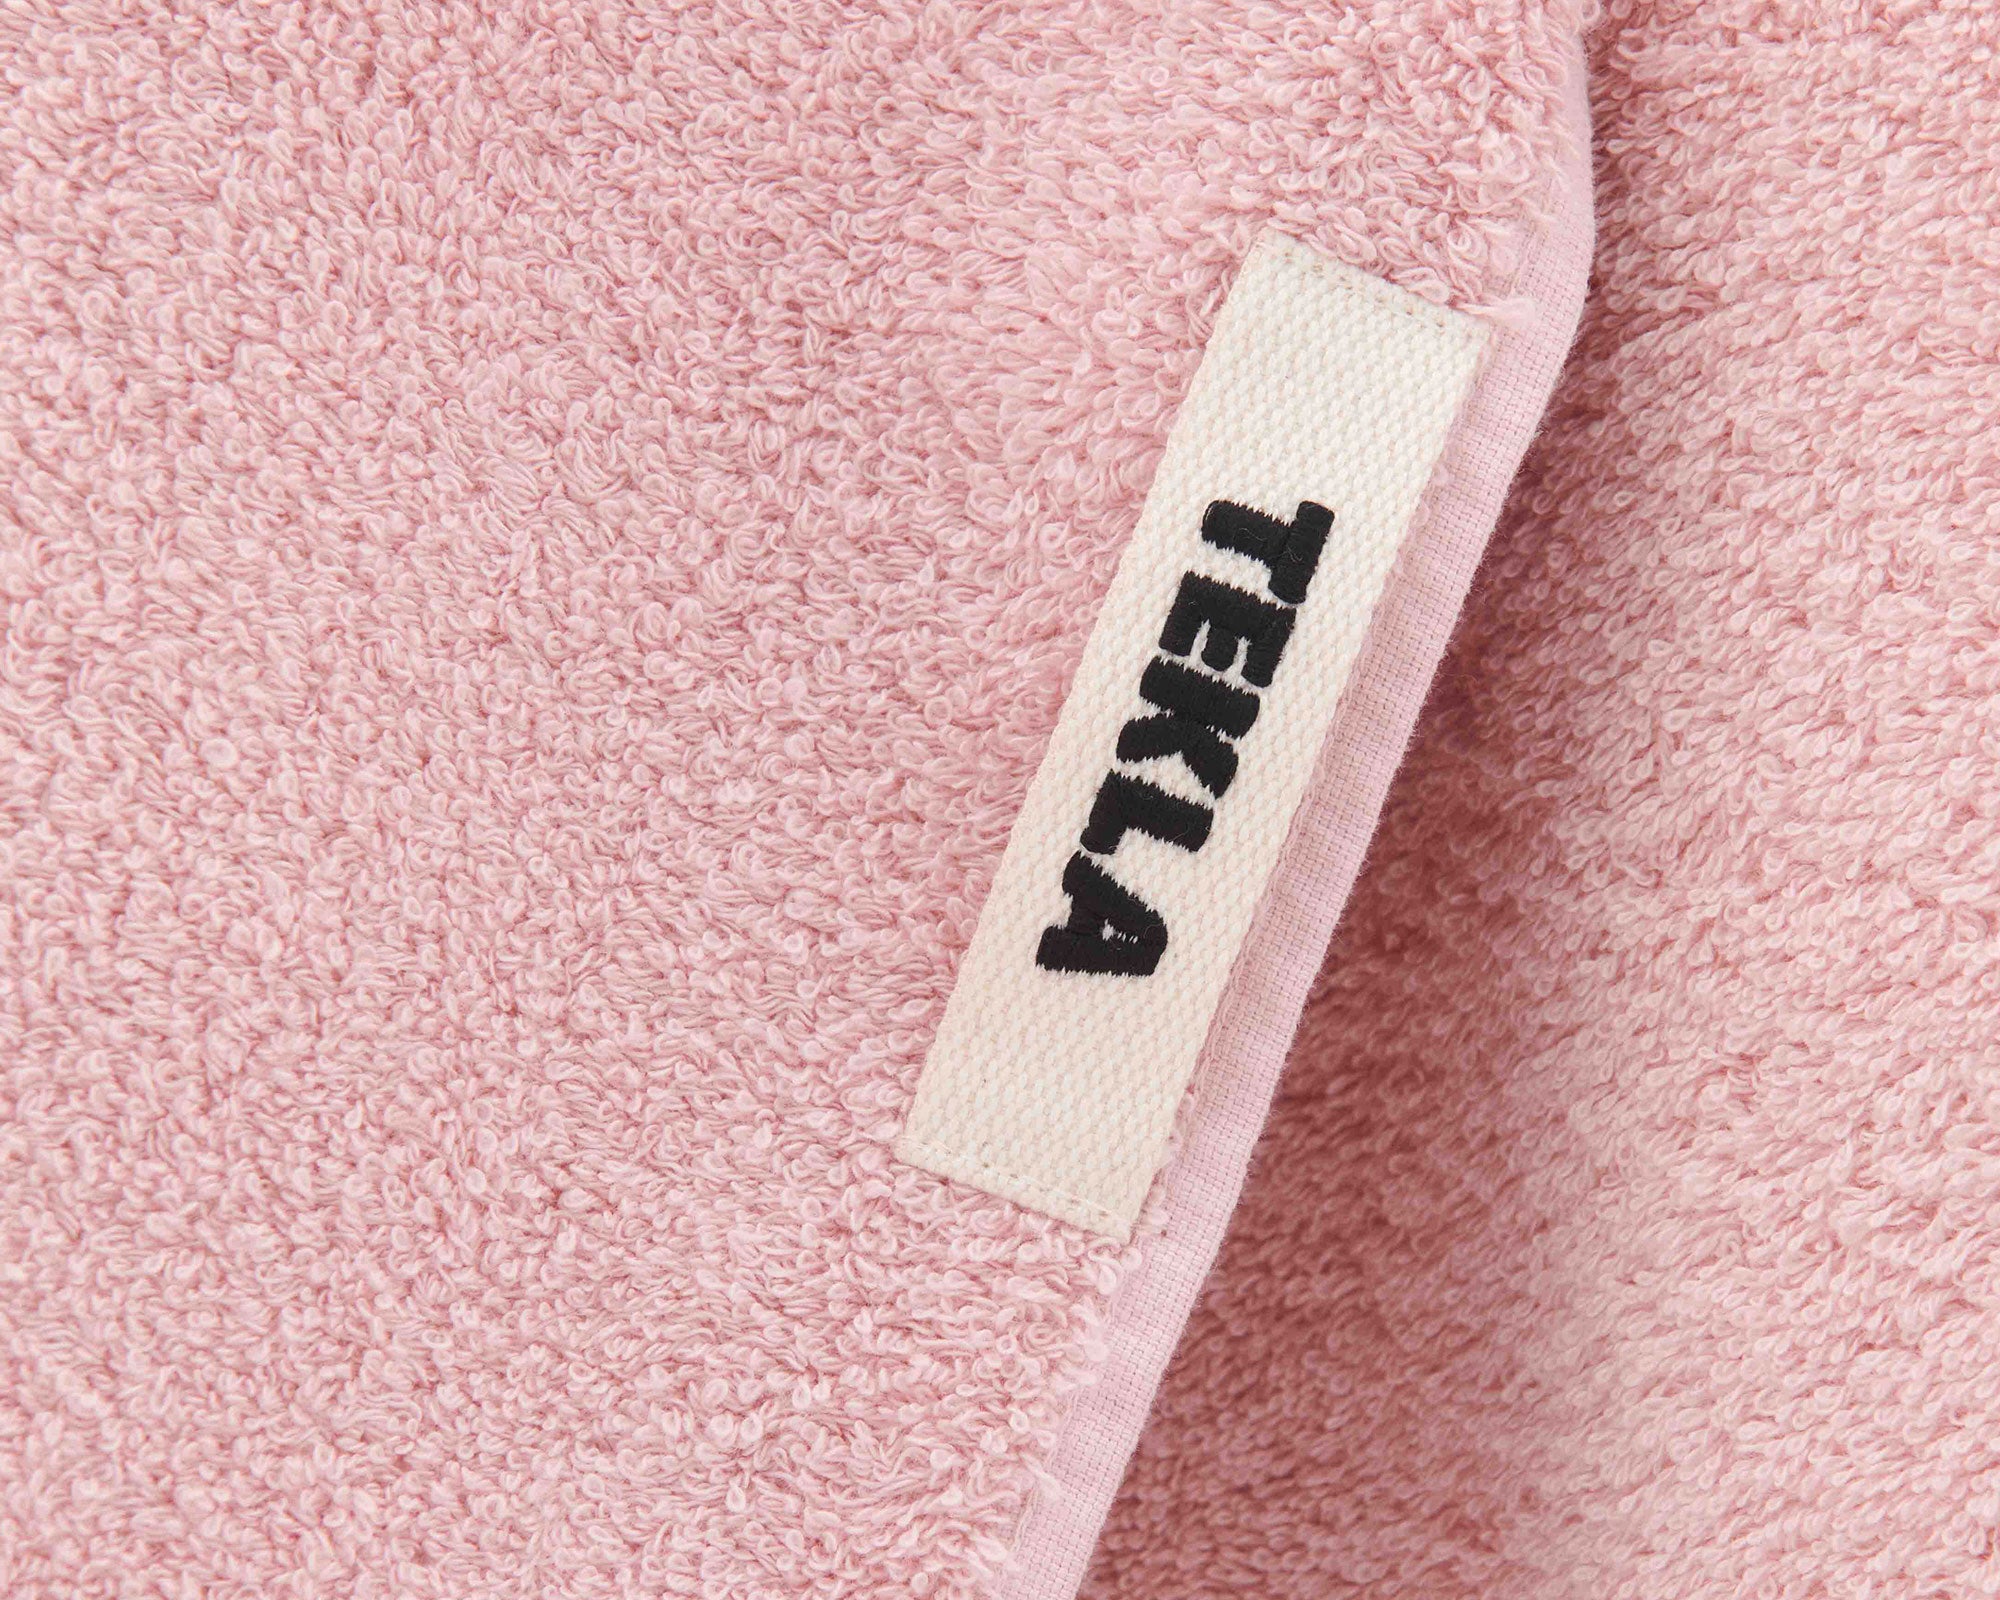 Tekla Organic Cotton Towel - Shaded Pink